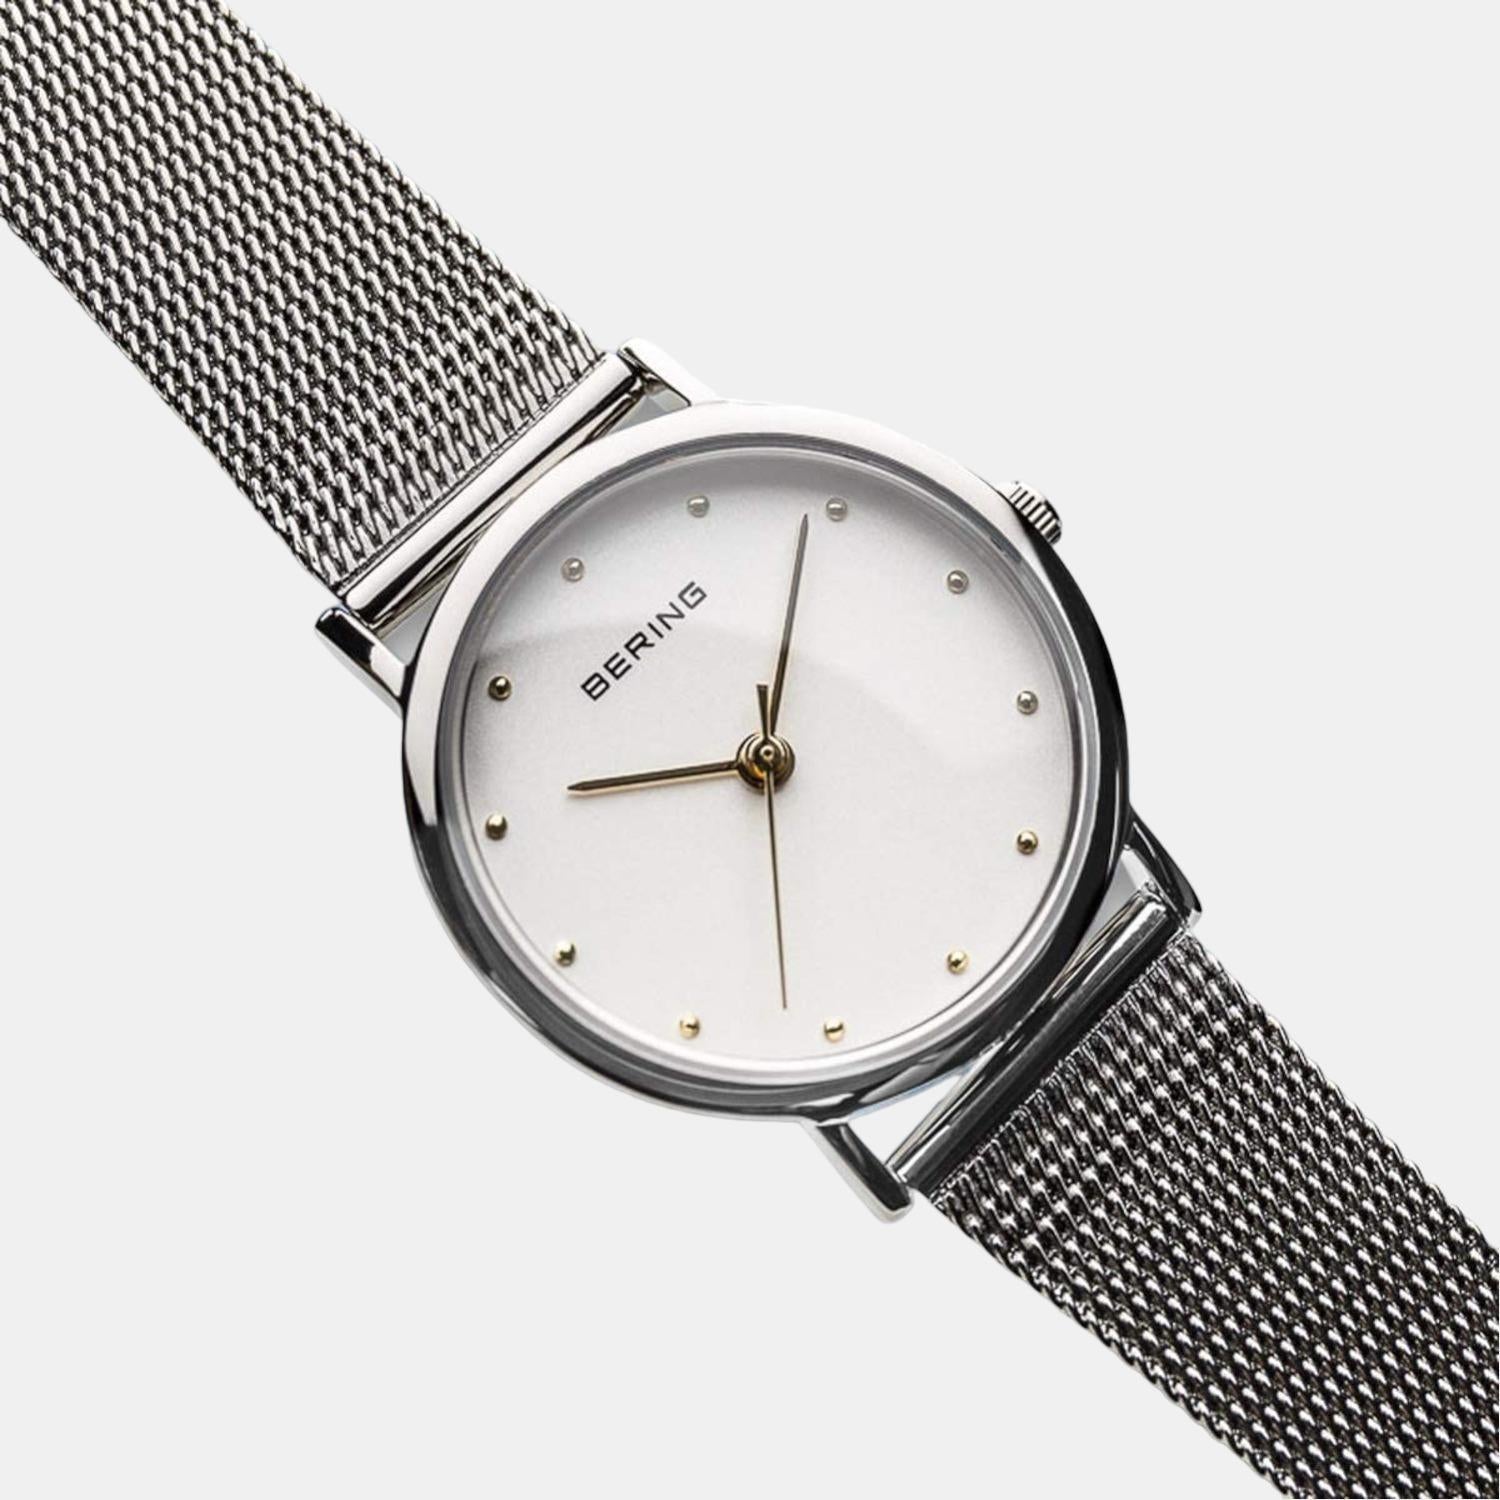 bering-stainless-steel-white-analog-female-watch-13426-001